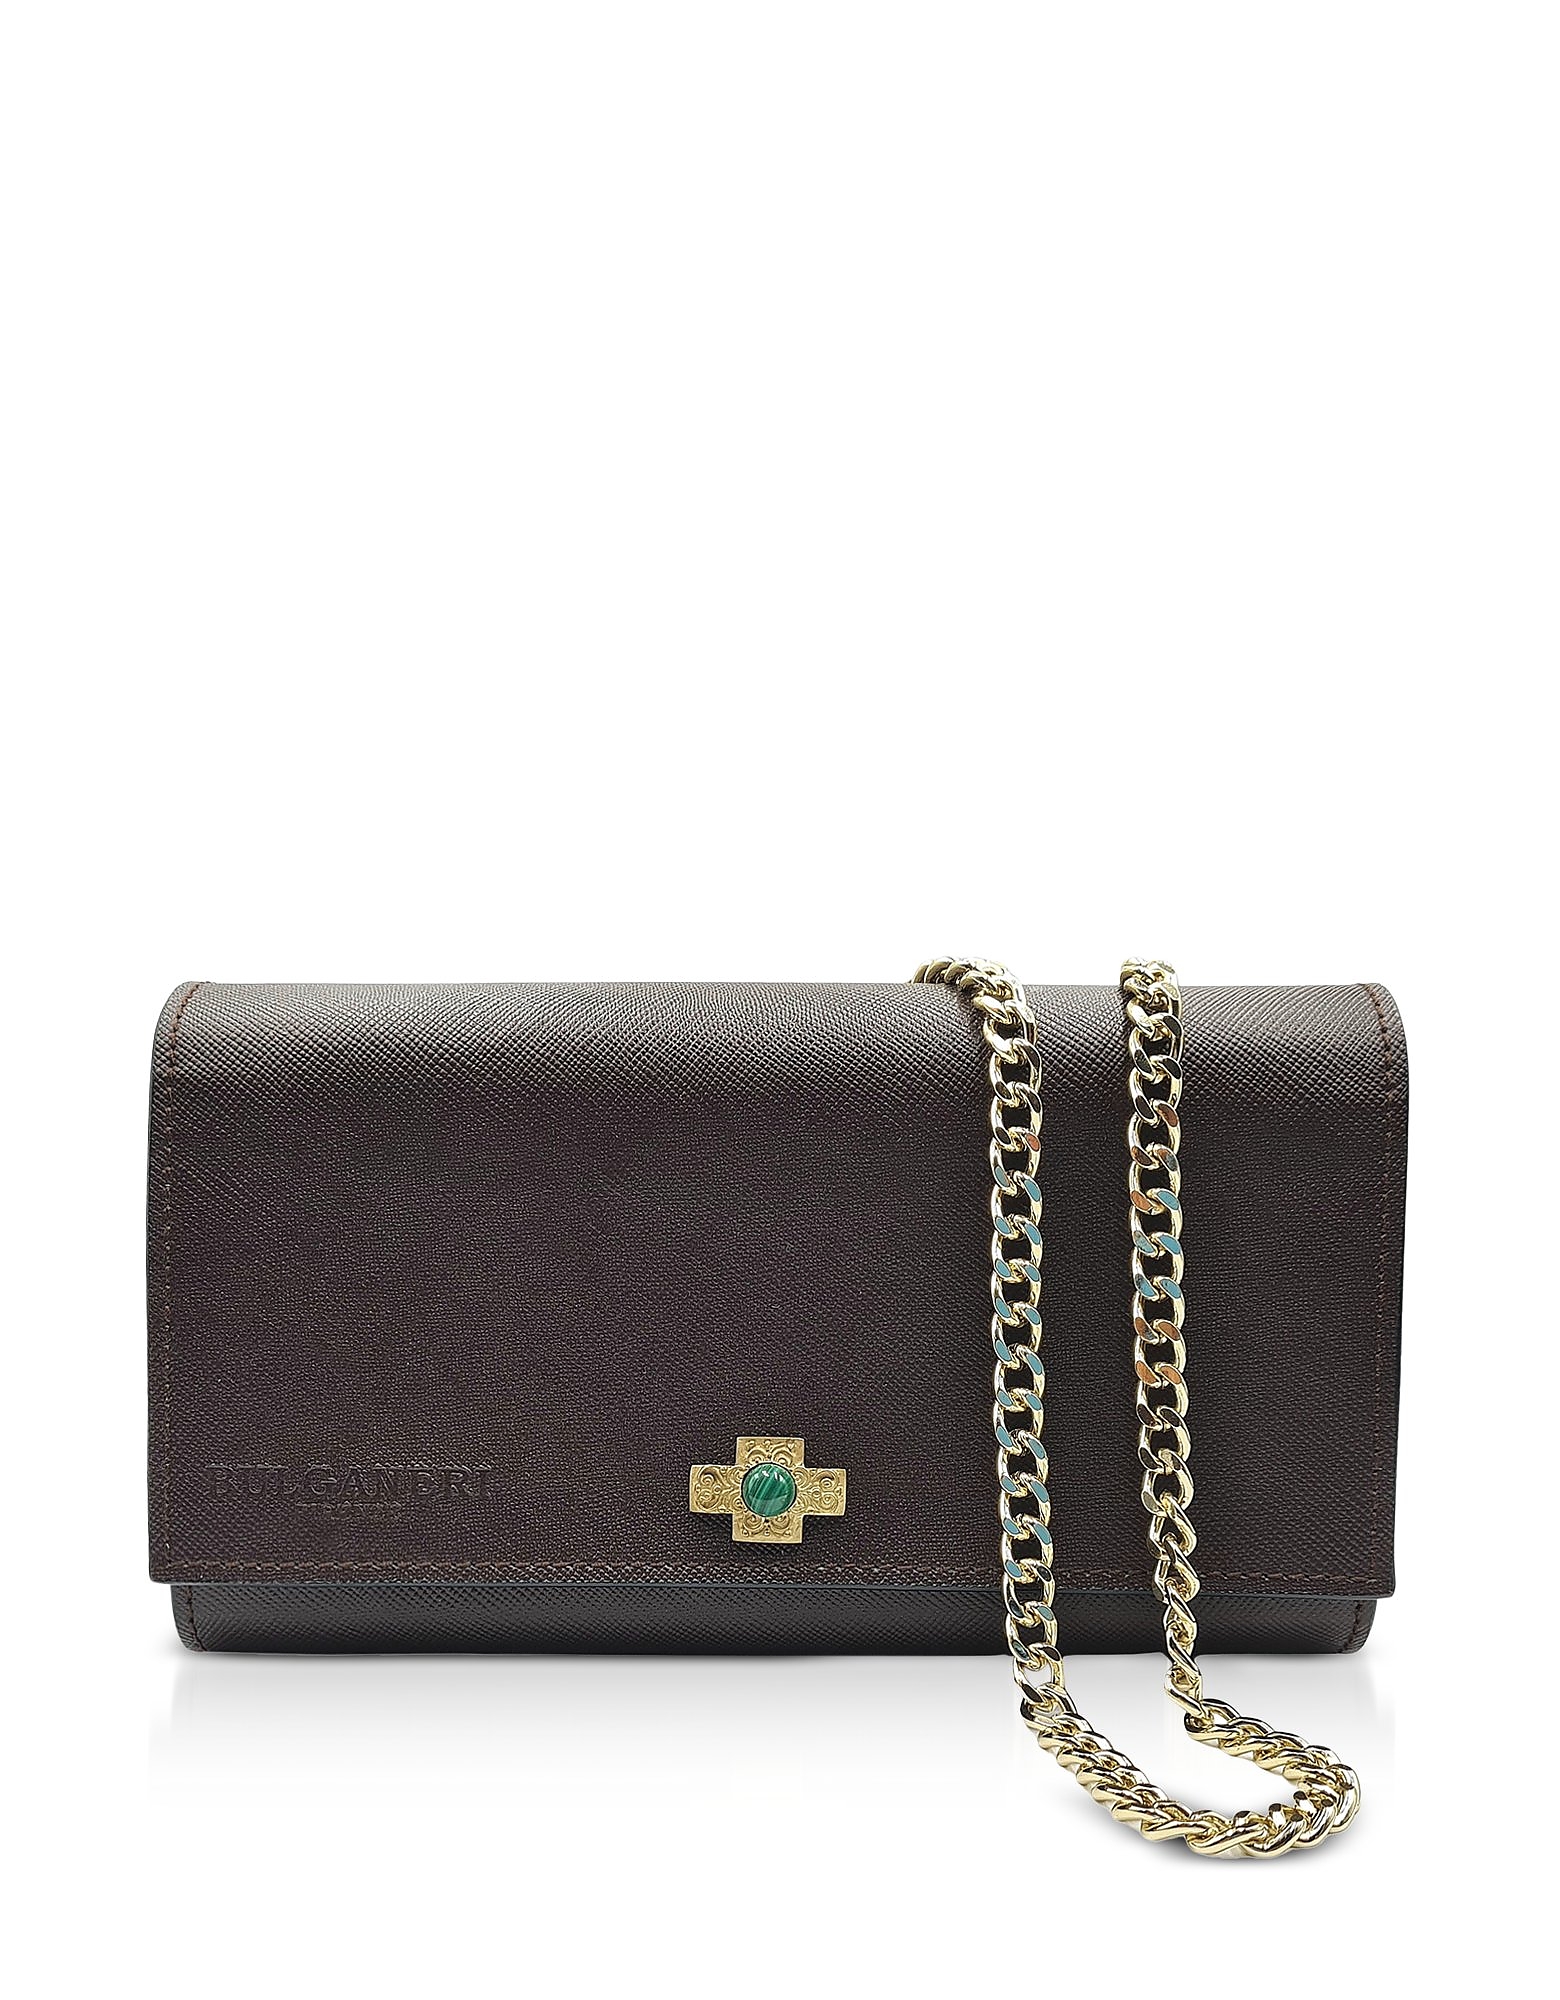 Bulganeri Designer Handbags Saffiano Dark Brown Leather Wallet Bag W/bronze Cross And Chain In Marron